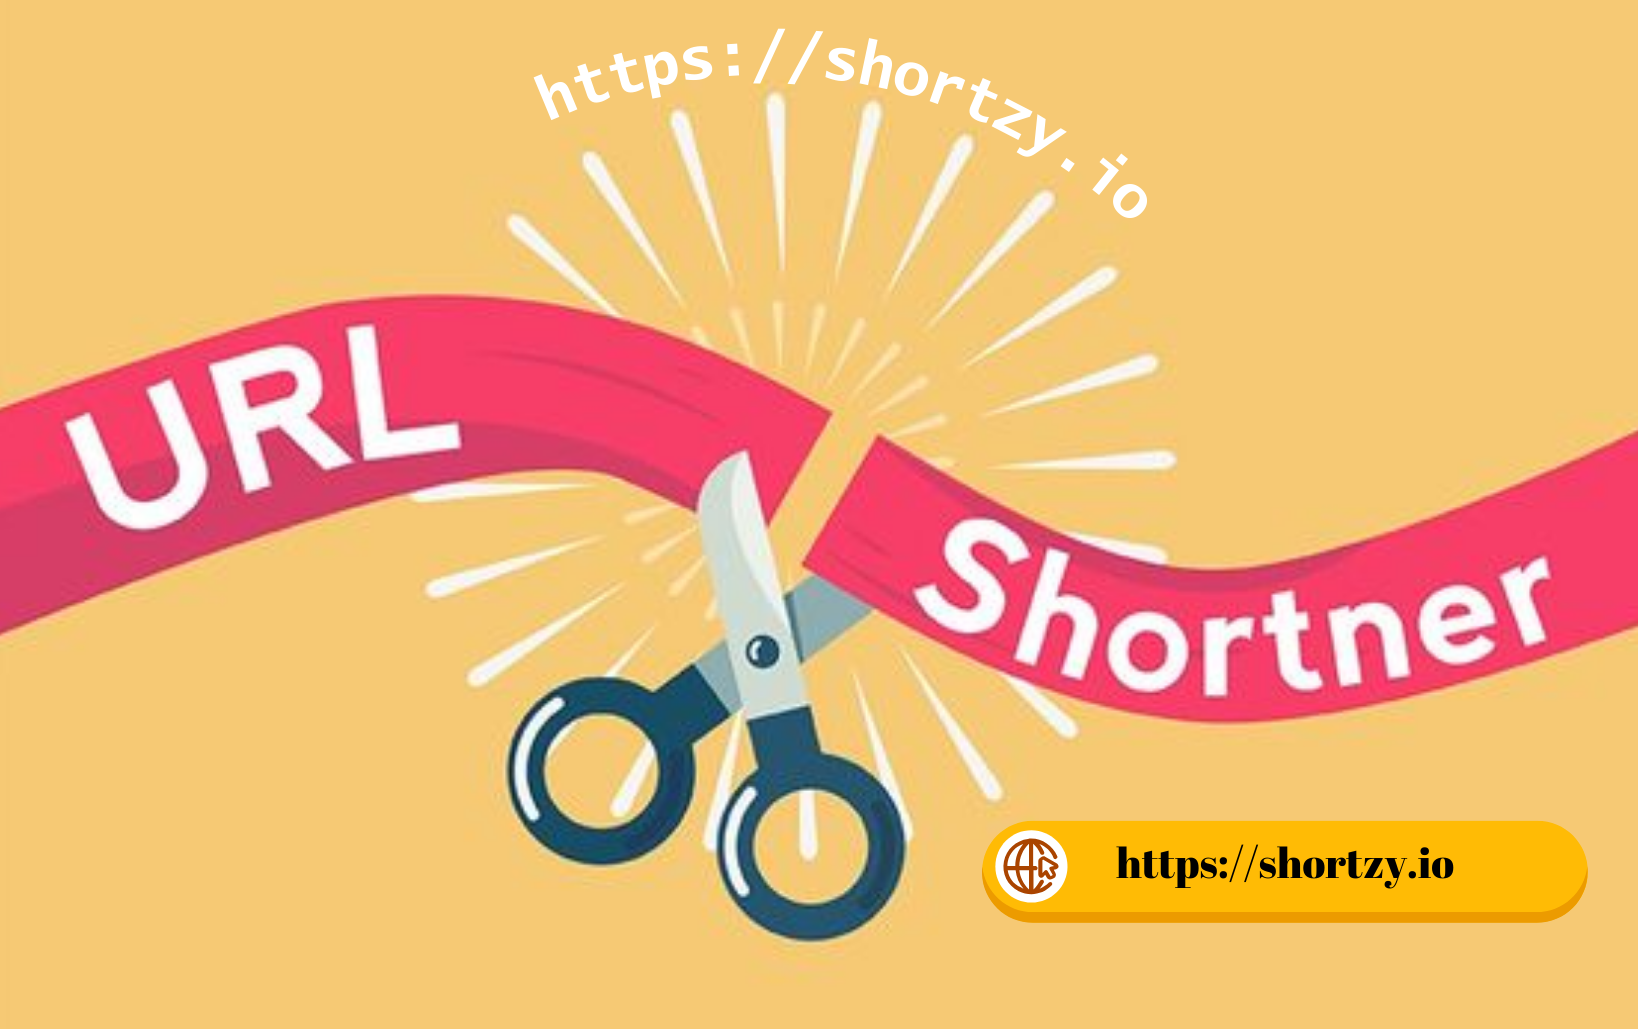 7 Benefits of URL Shortened